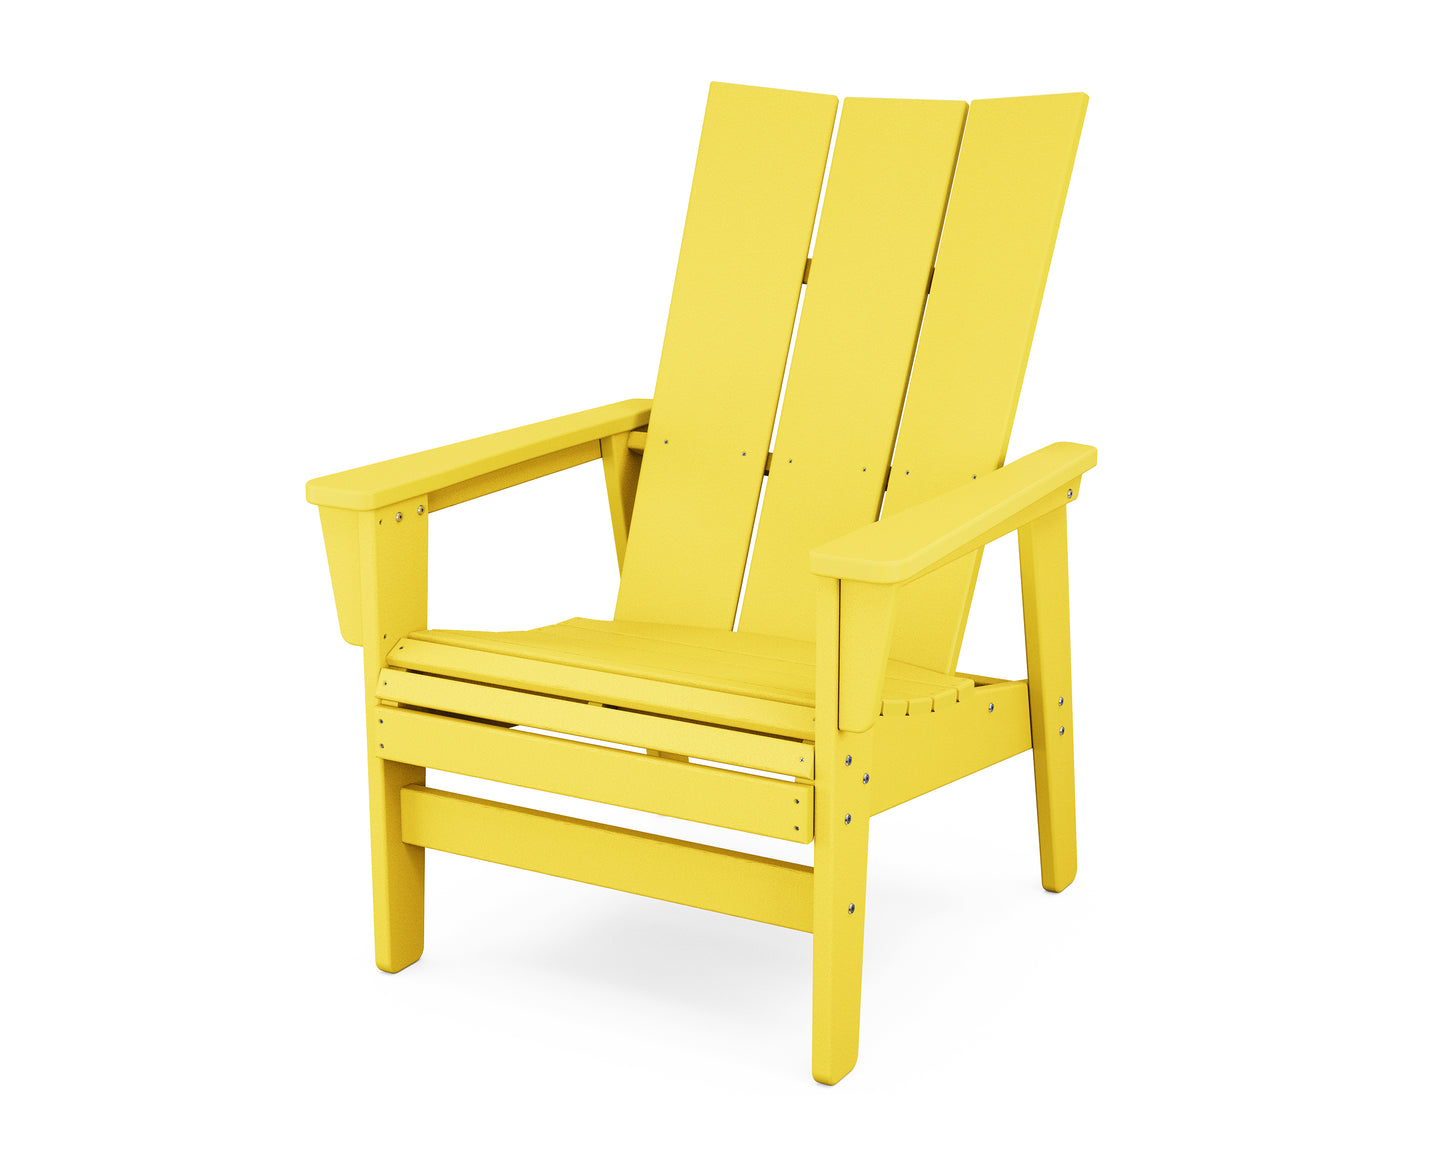 Modern Grand Upright Adirondack Chair